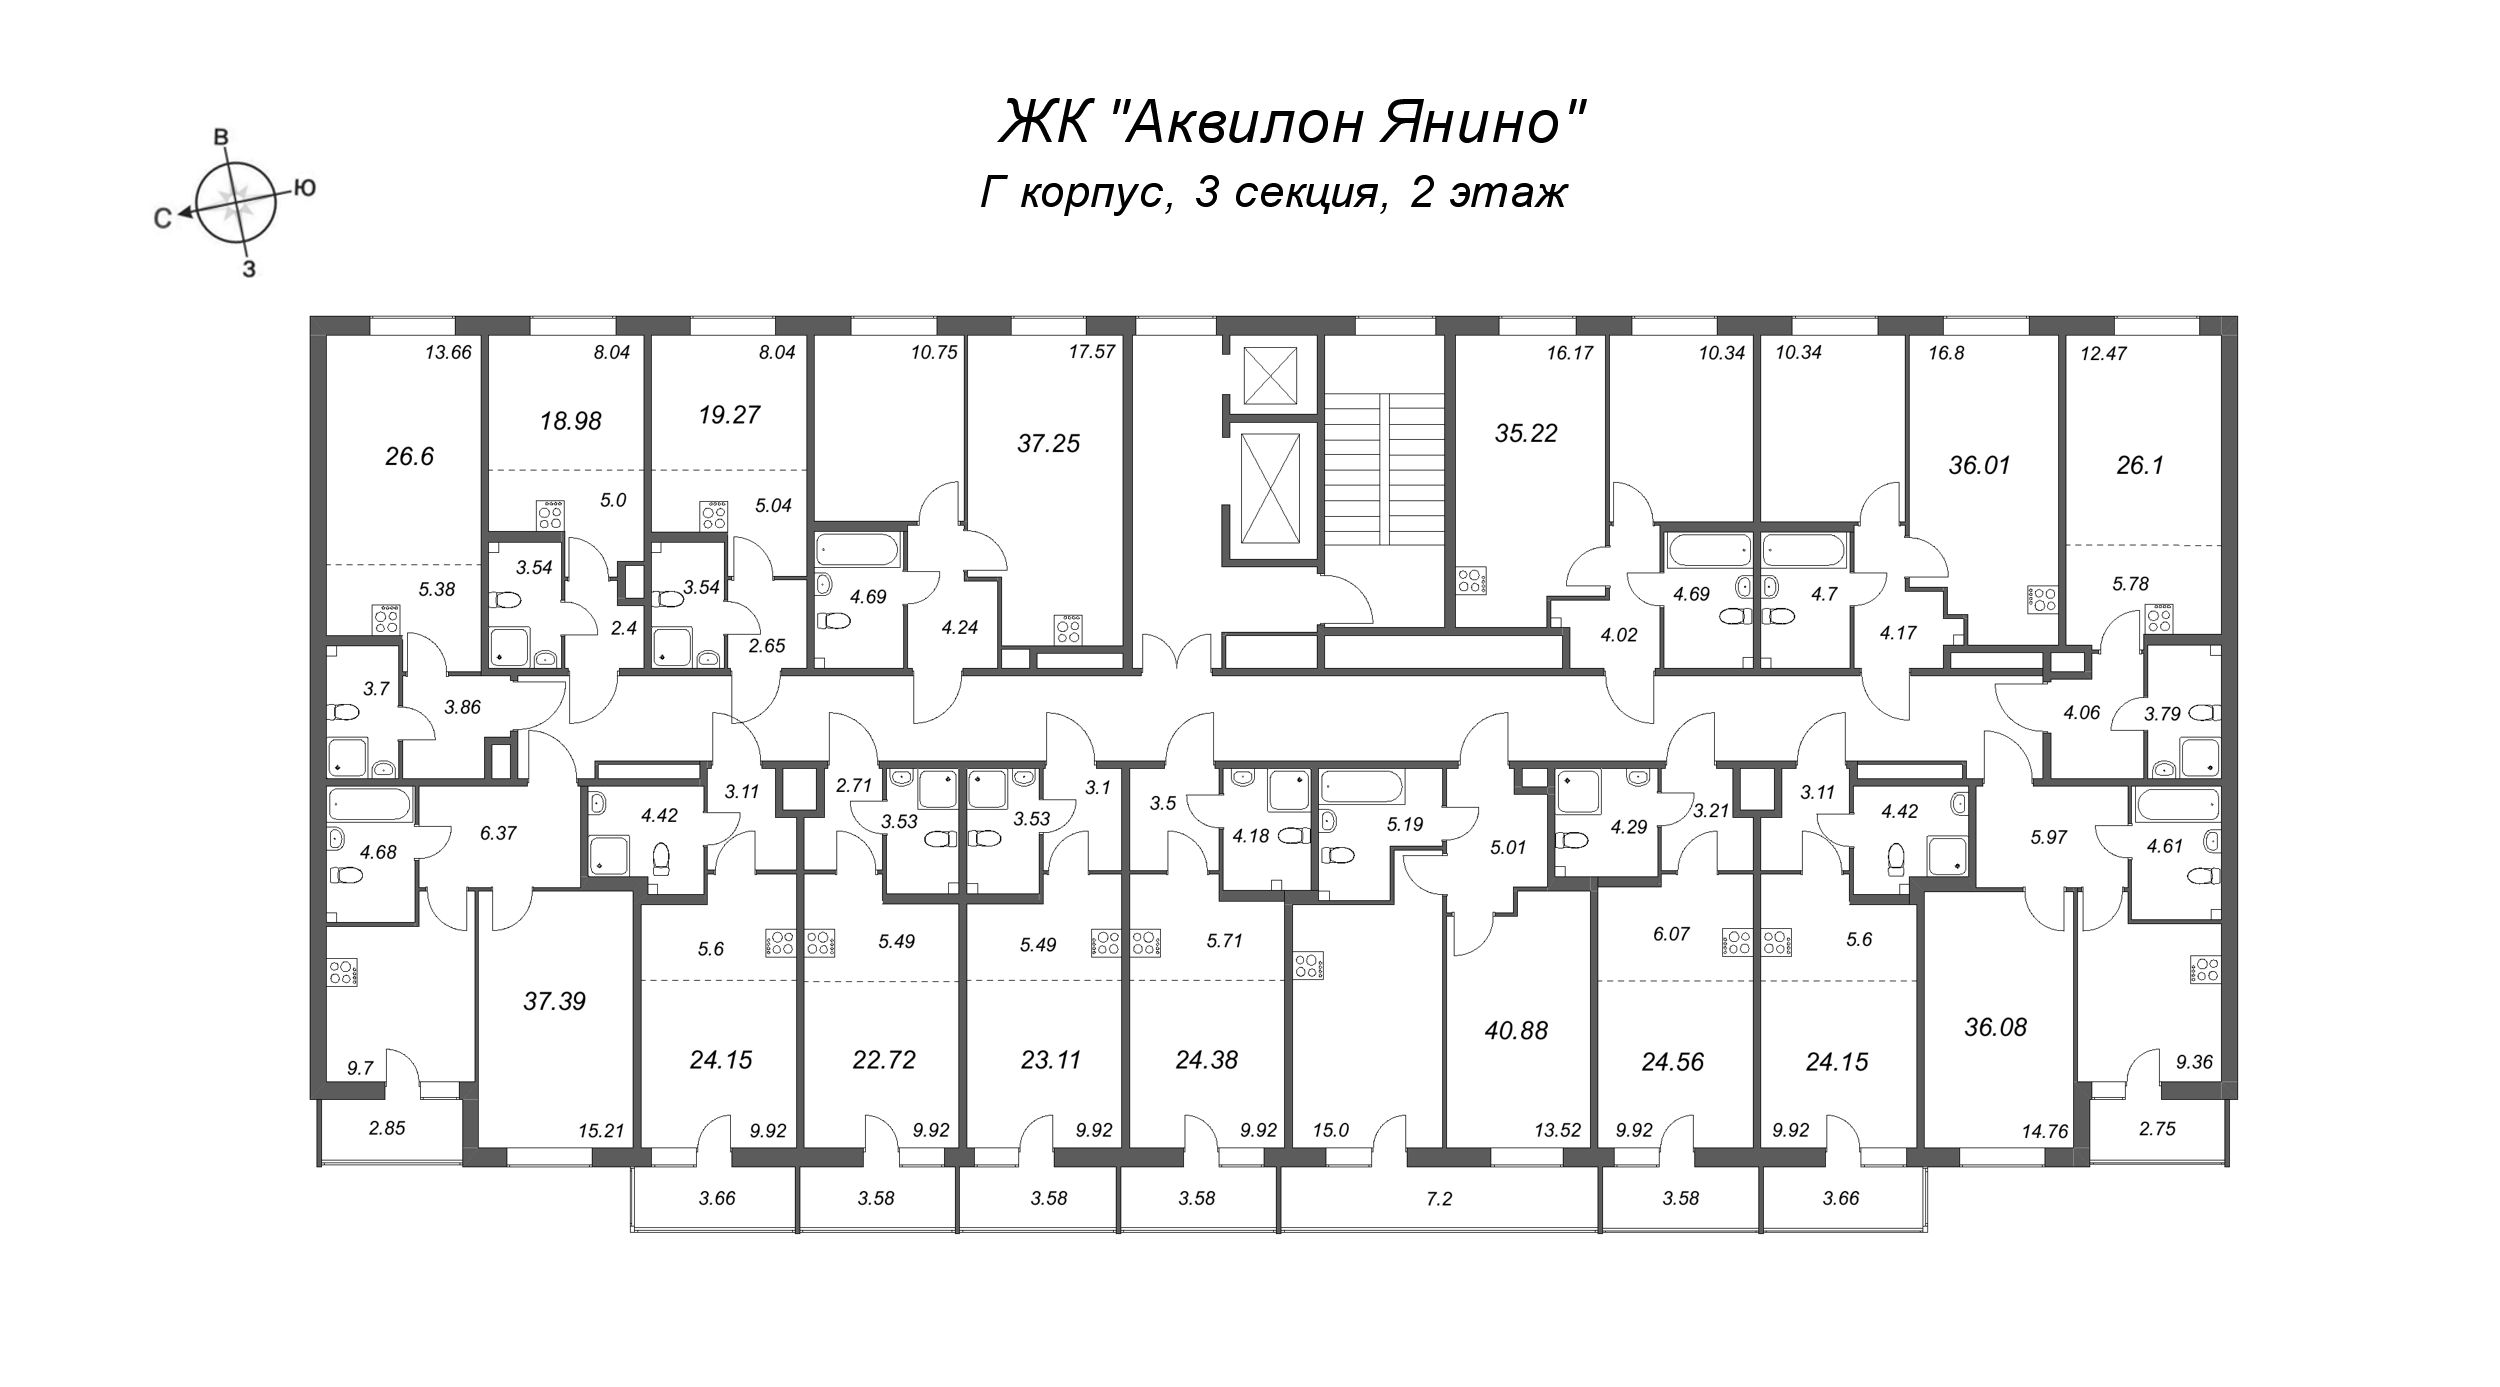 2-комнатная (Евро) квартира, 36.01 м² в ЖК "Аквилон Янино" - планировка этажа